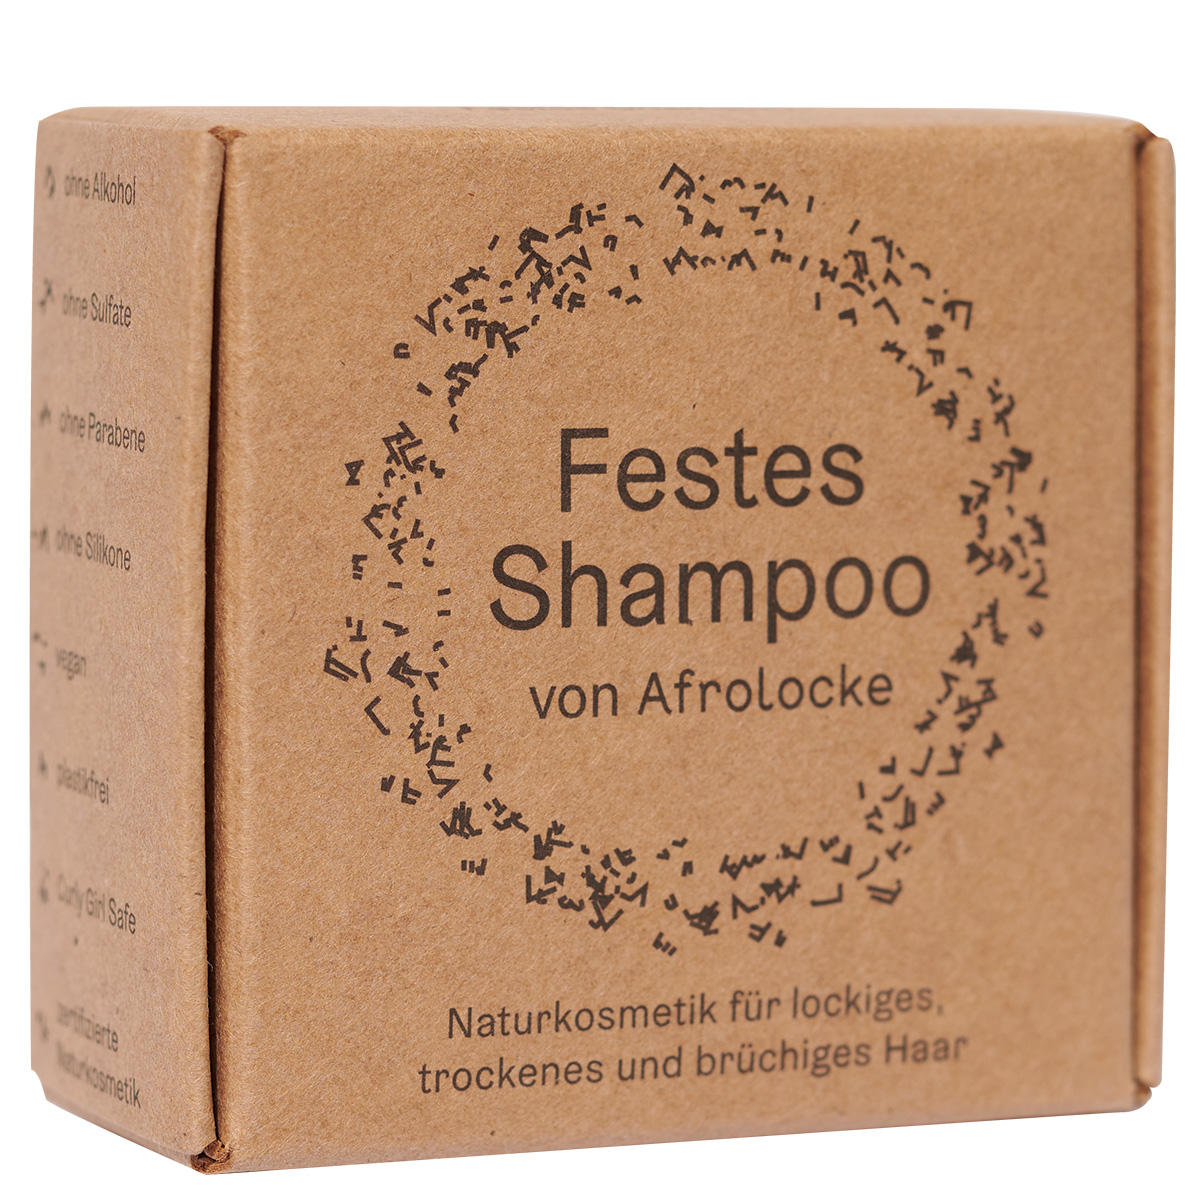 Afrolocke Stevige shampoo 55 g - 3